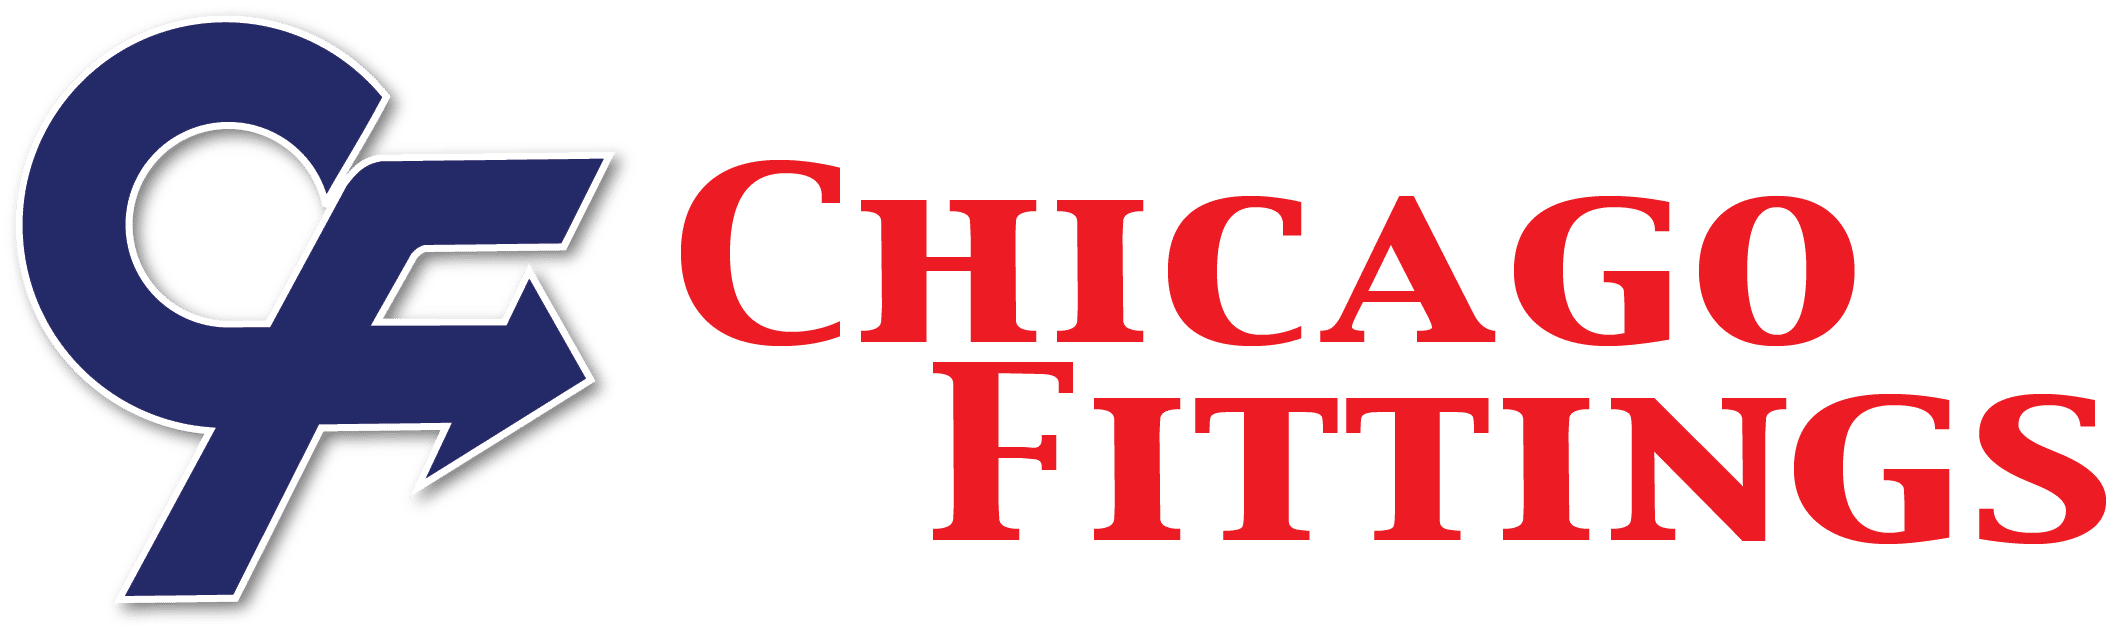 Chicago Fittings Logo-Horizontal